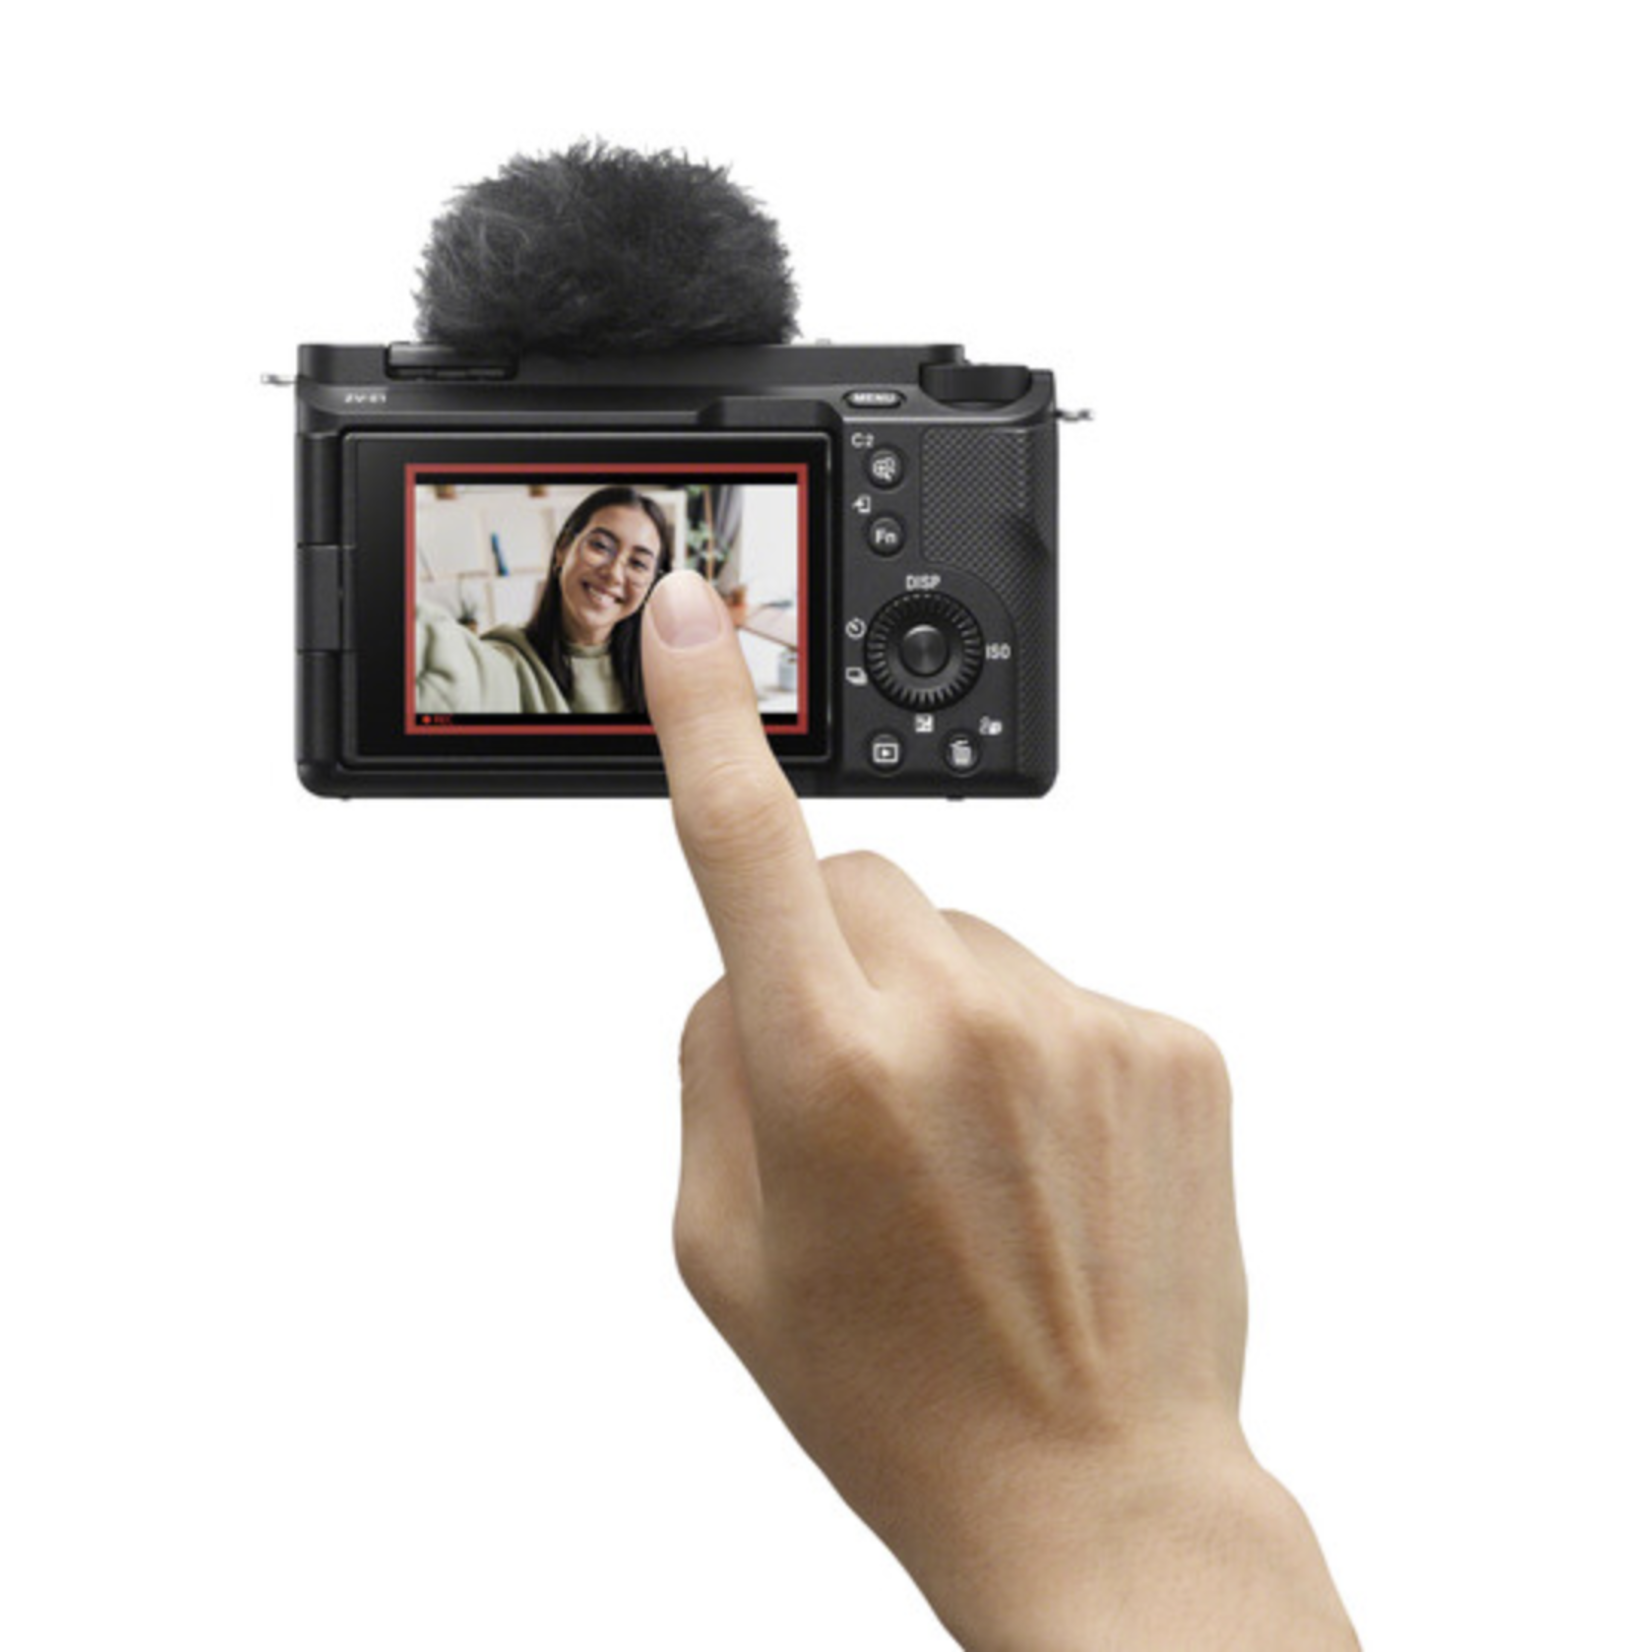 Sony Sony ZV-E1 Mirrorless Camera